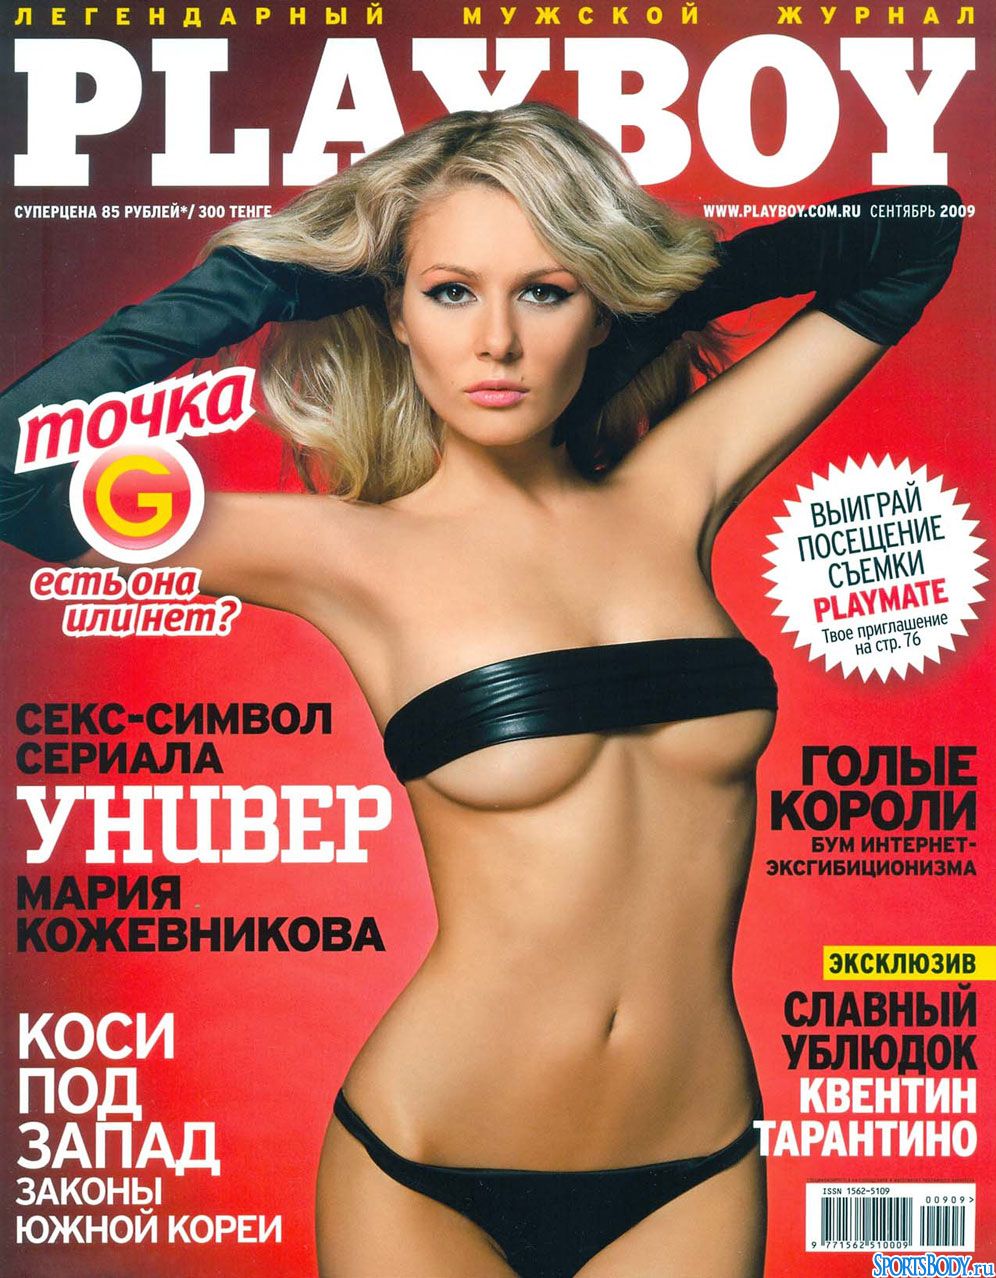 Model Playboy Jadi Anggota DPR Rusia